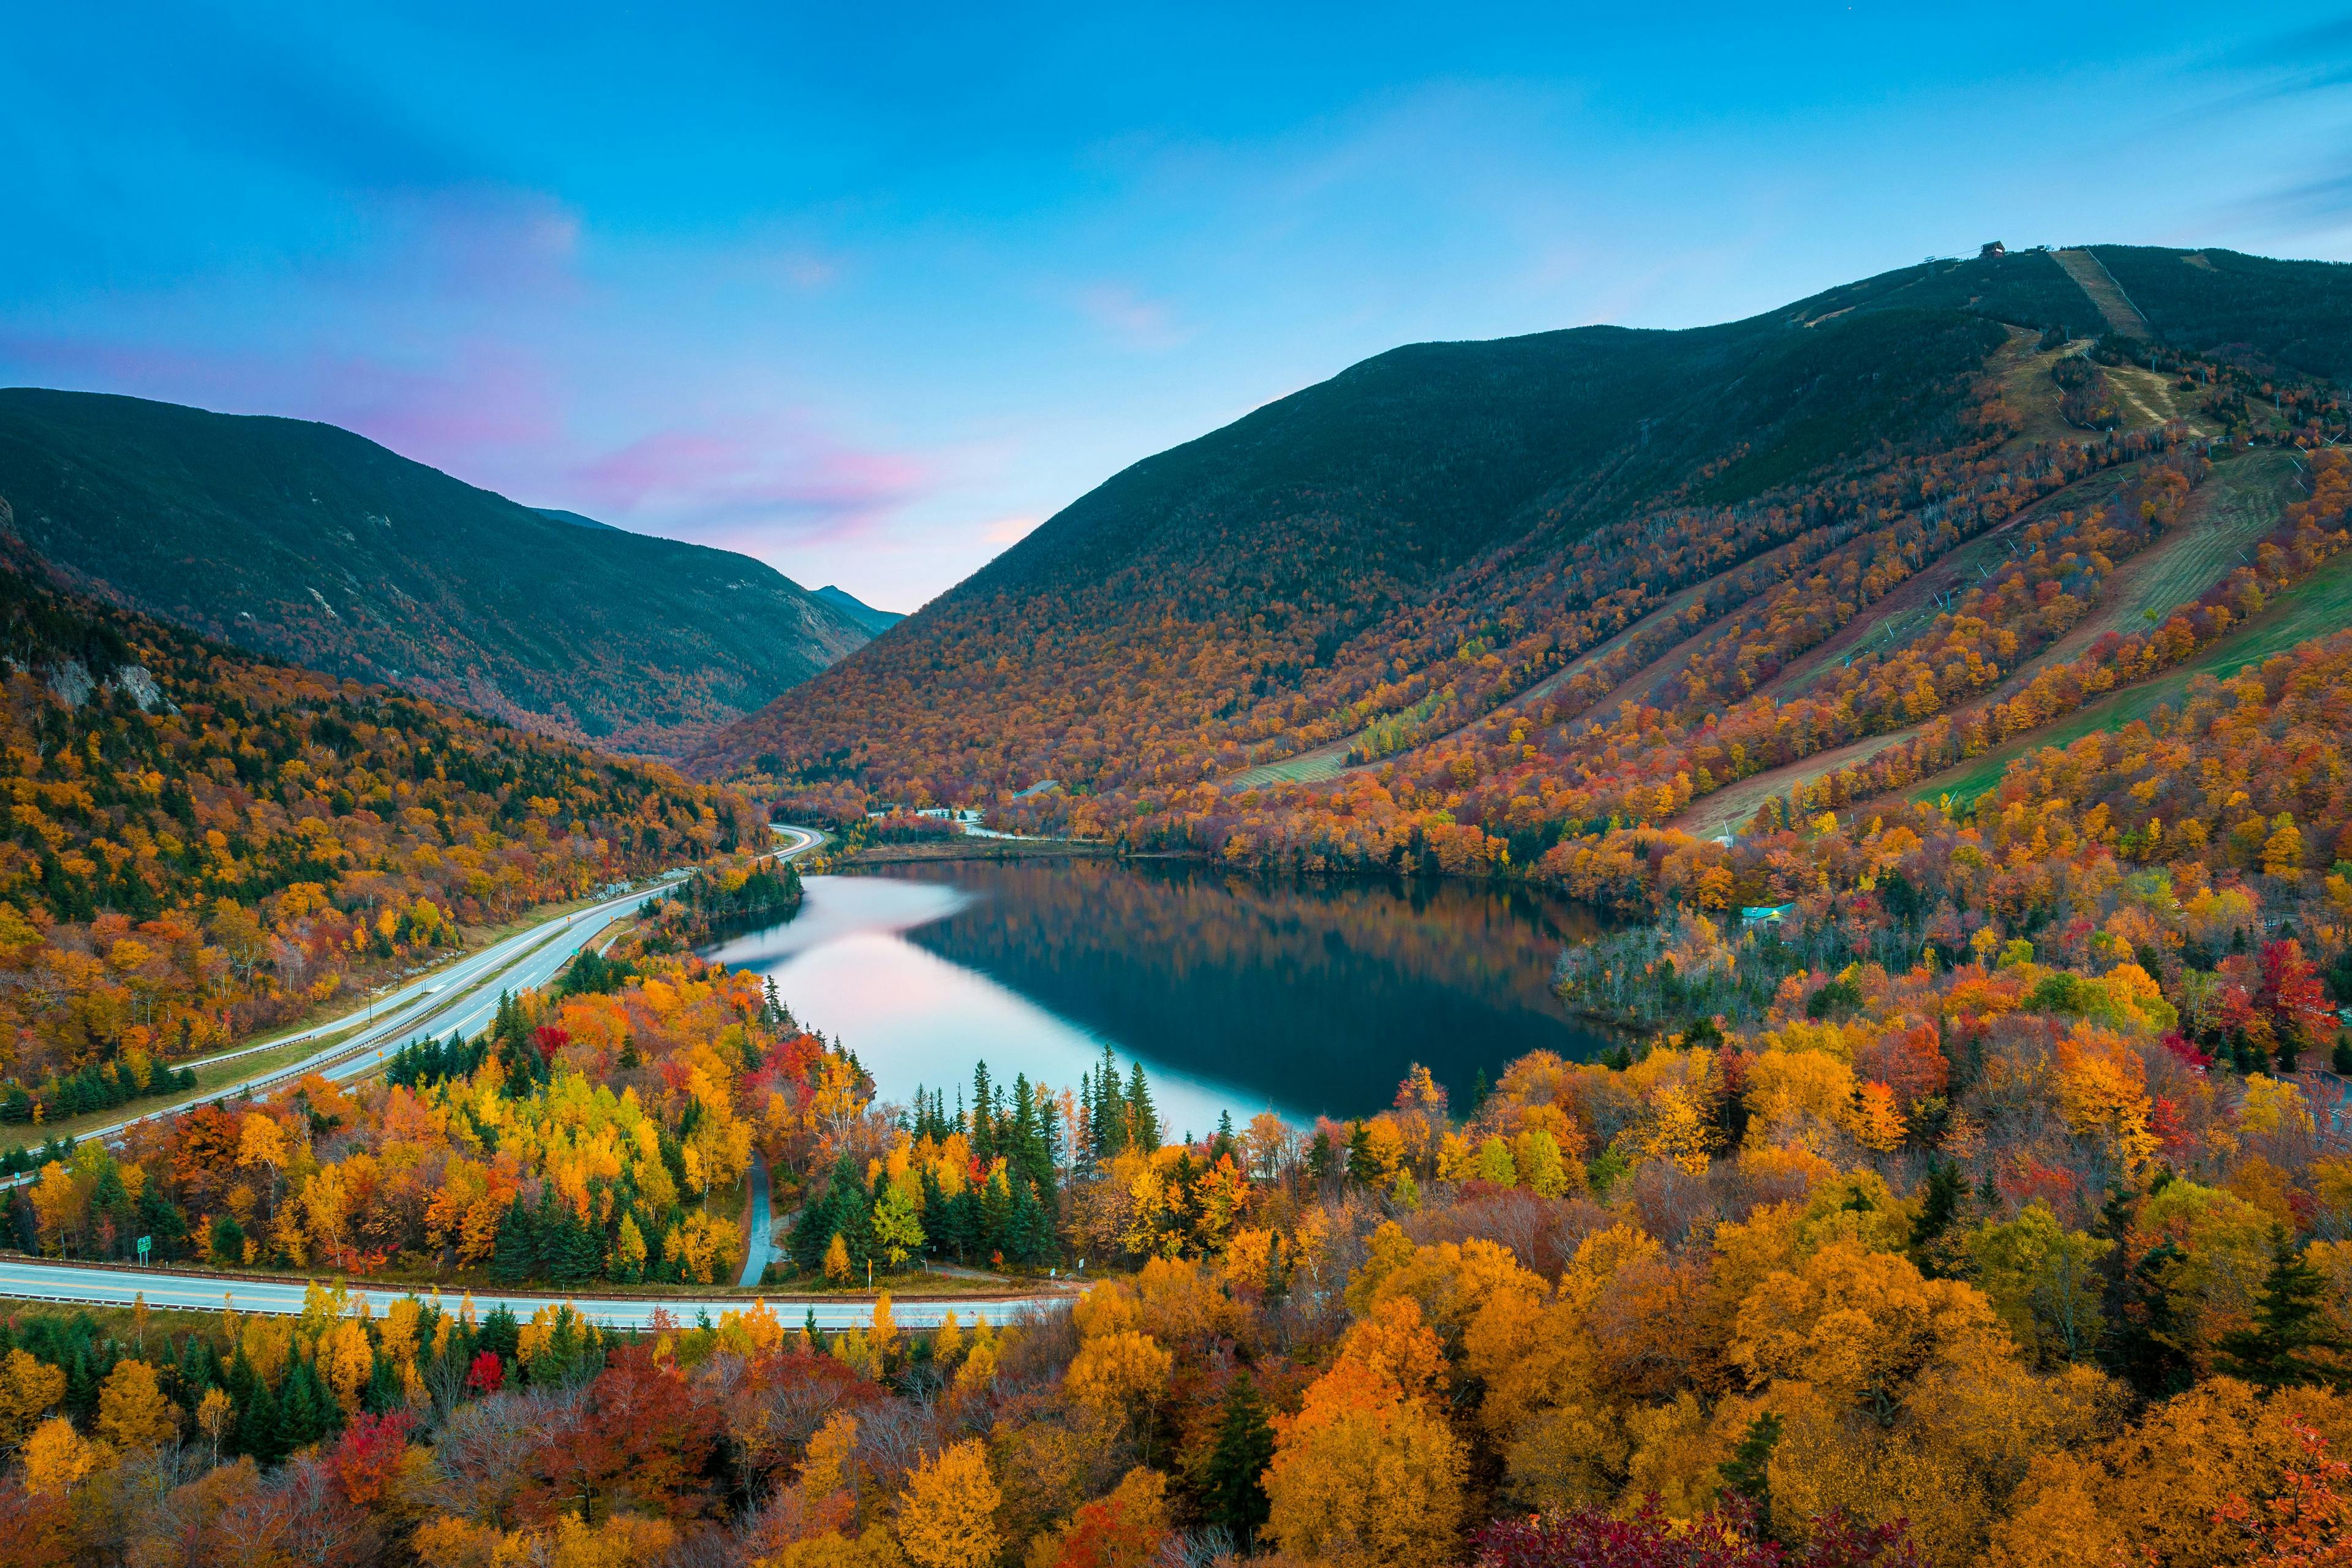 Fall destination - October - New England RatePunk